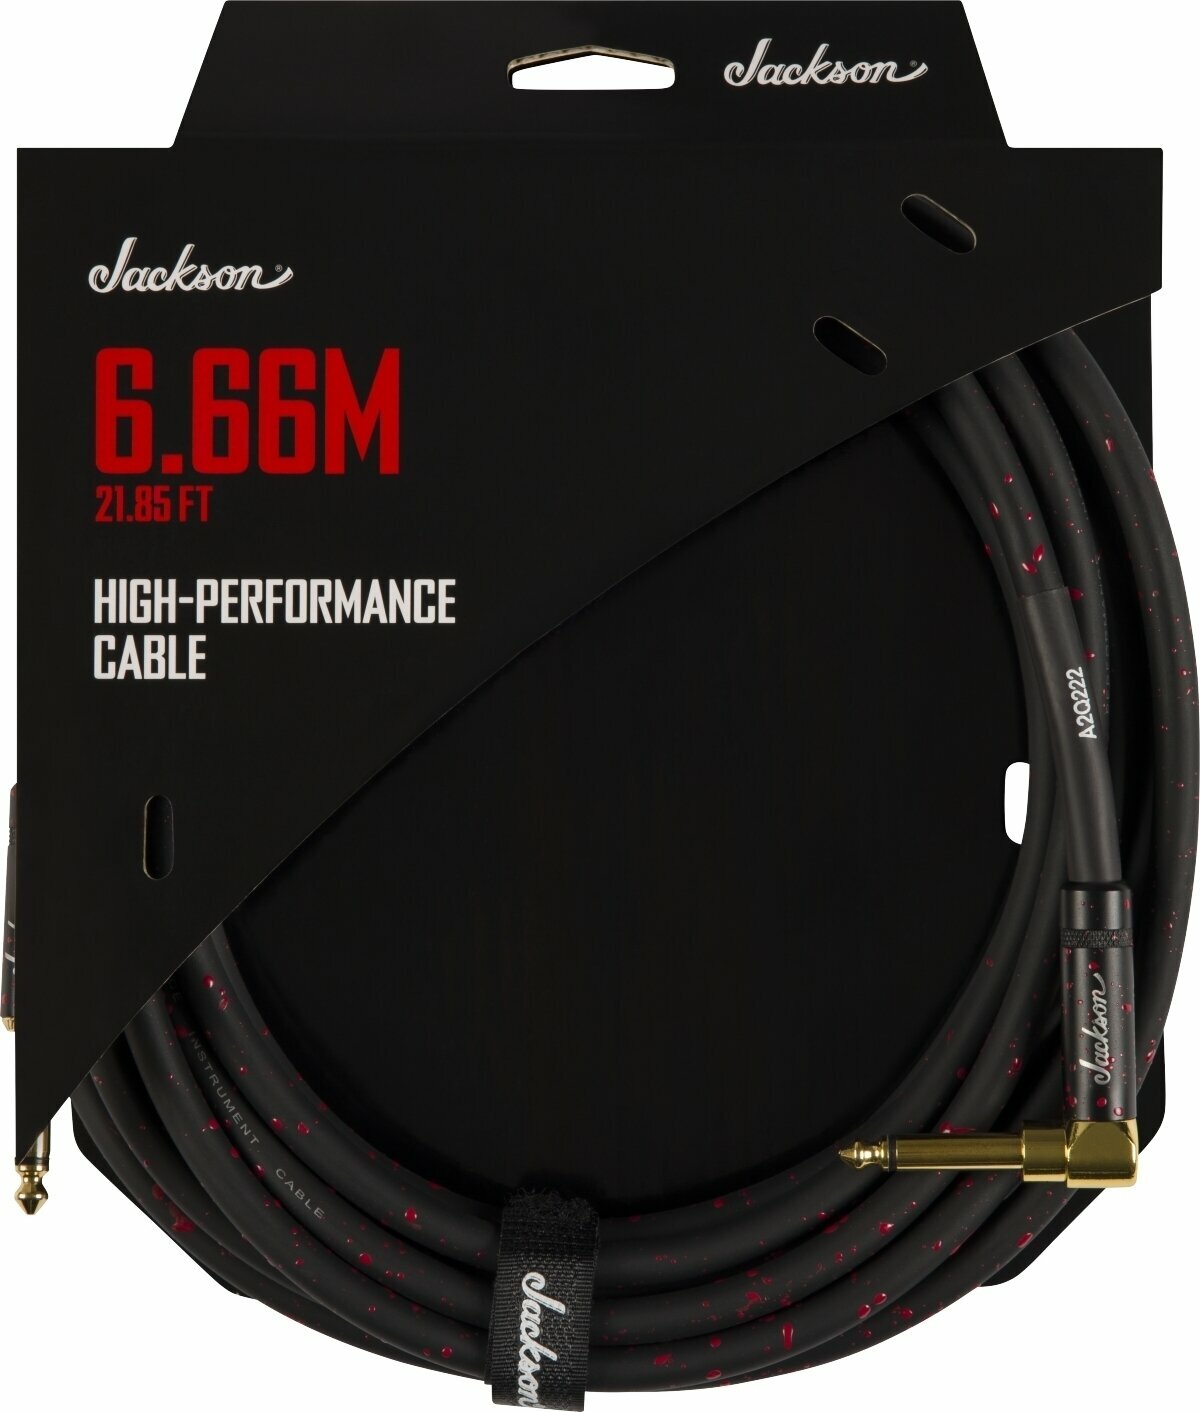 Instrumentkabel Jackson High Performance Cable Rood-Zwart 6,66 m Recht - Gebogen